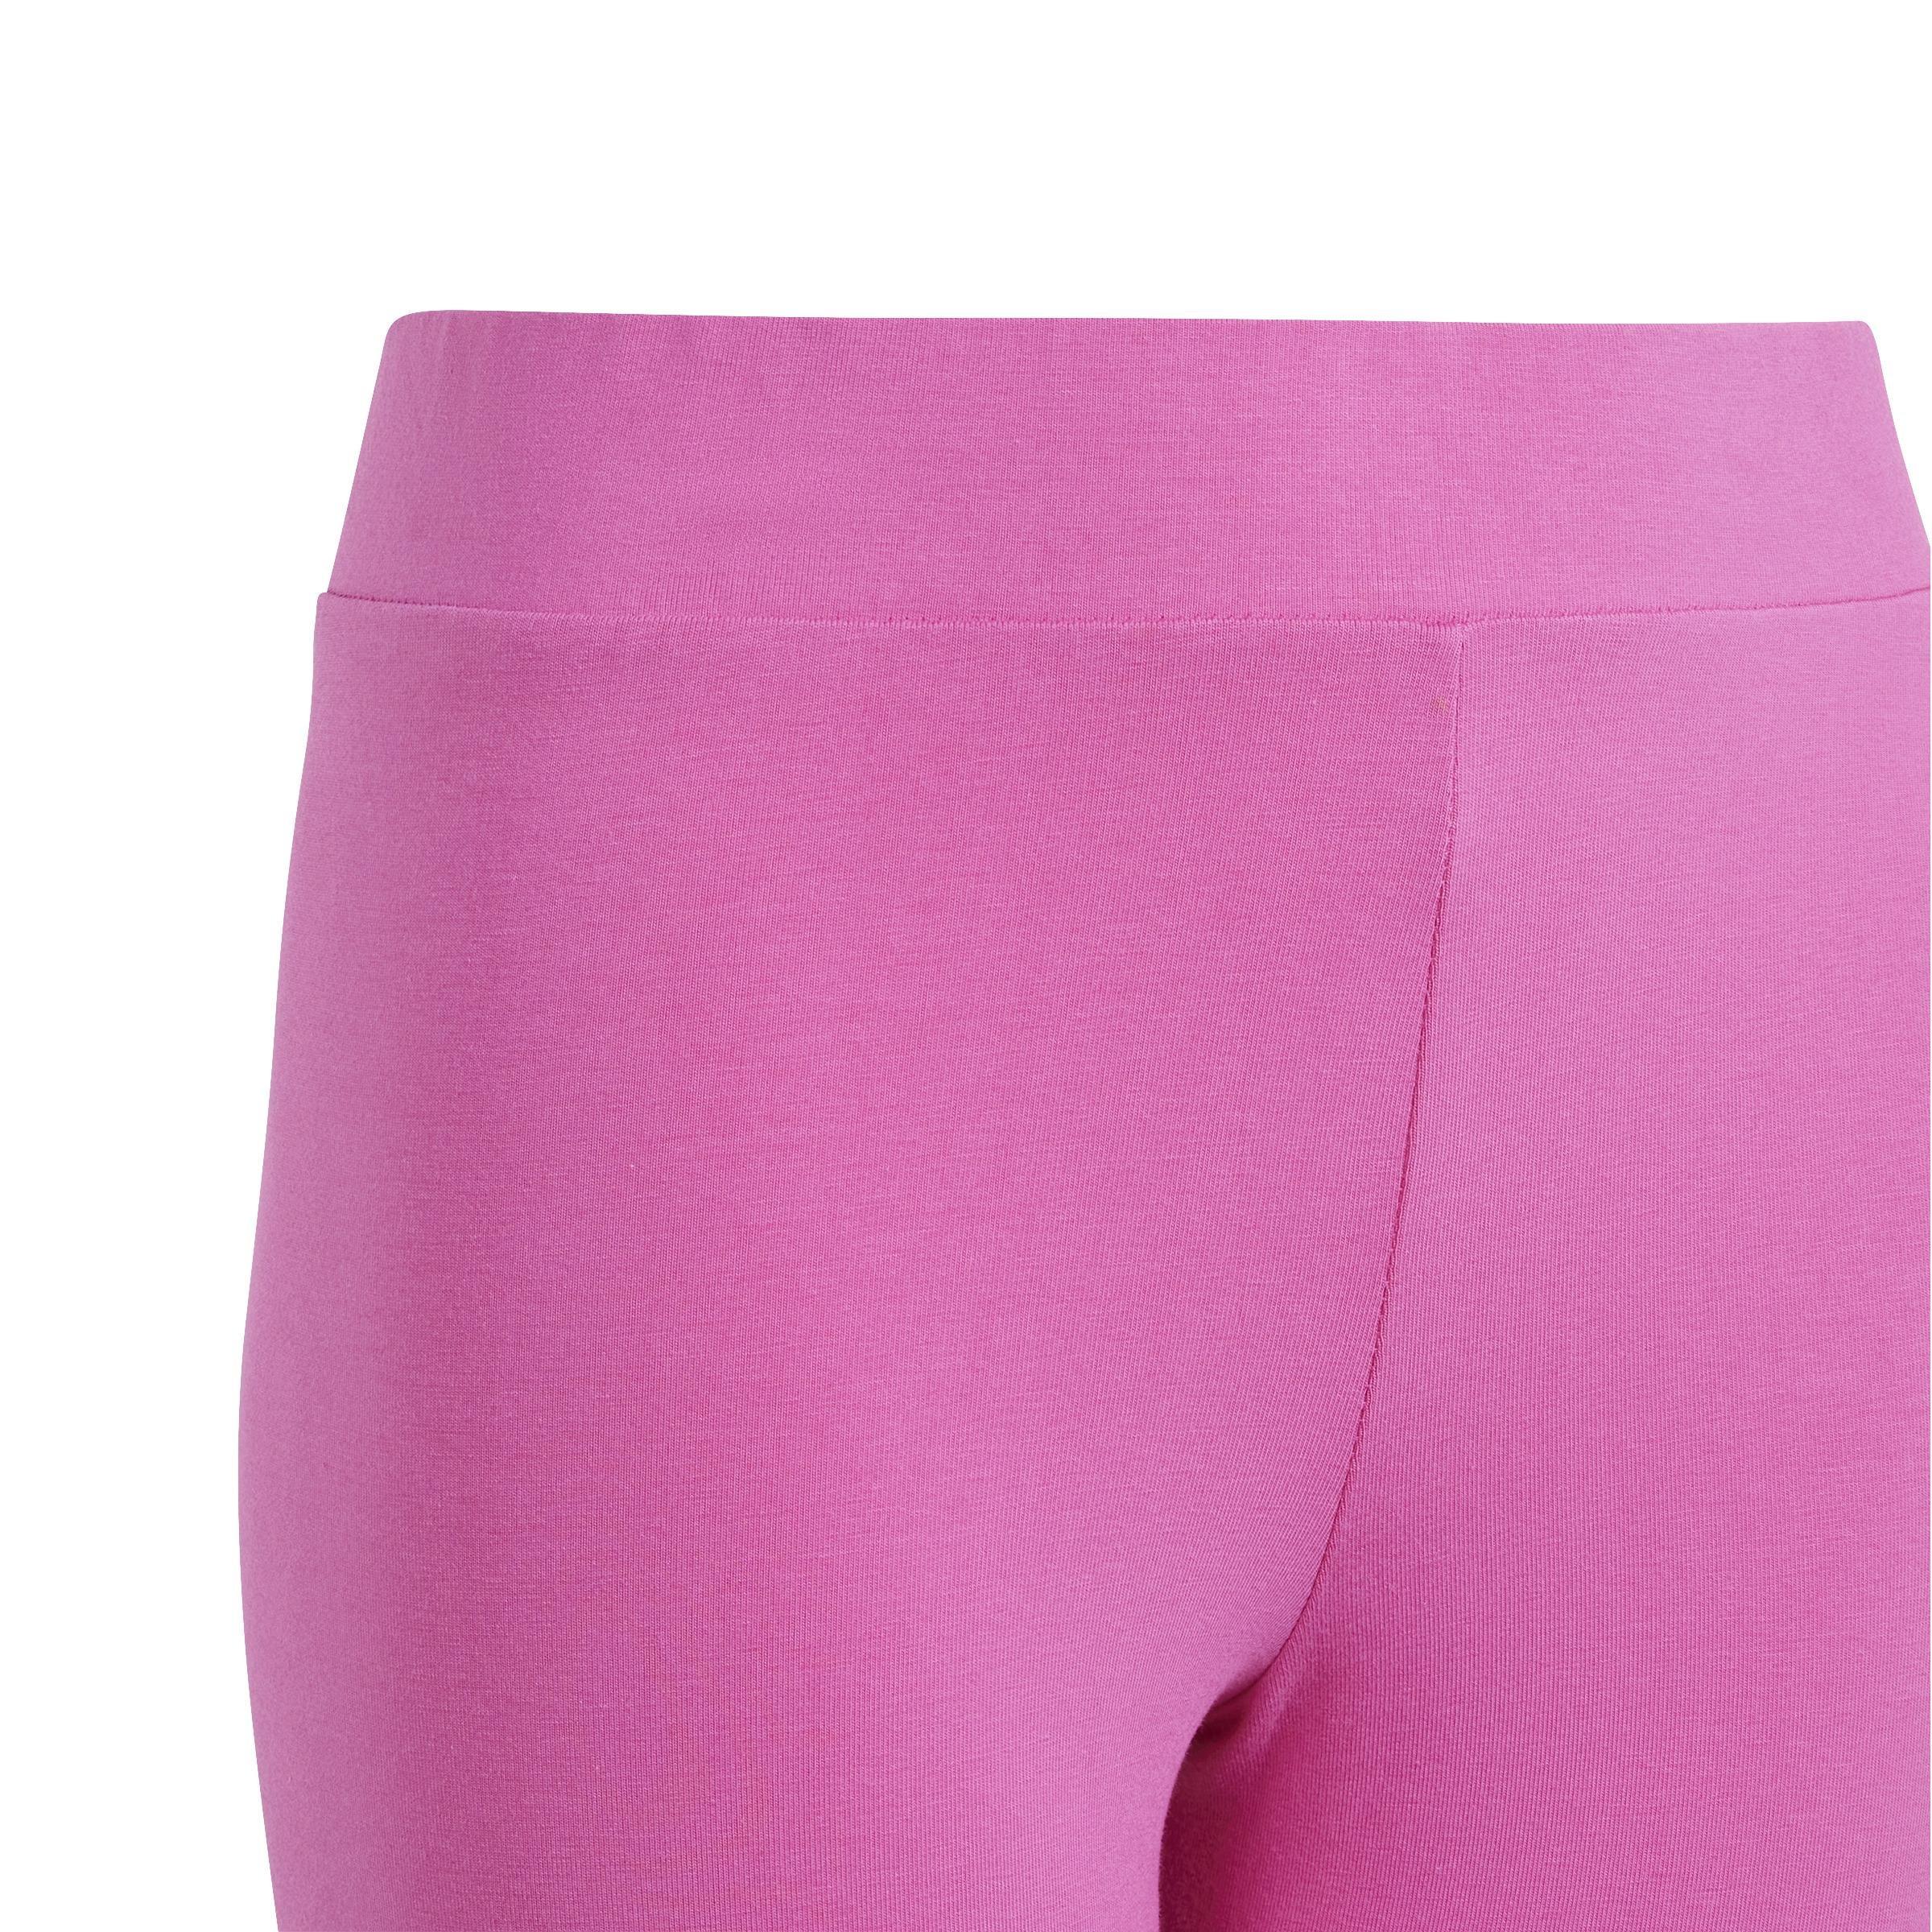 adidas - Kids Girls Essentials Linear Logo Cotton Leggings, Pink